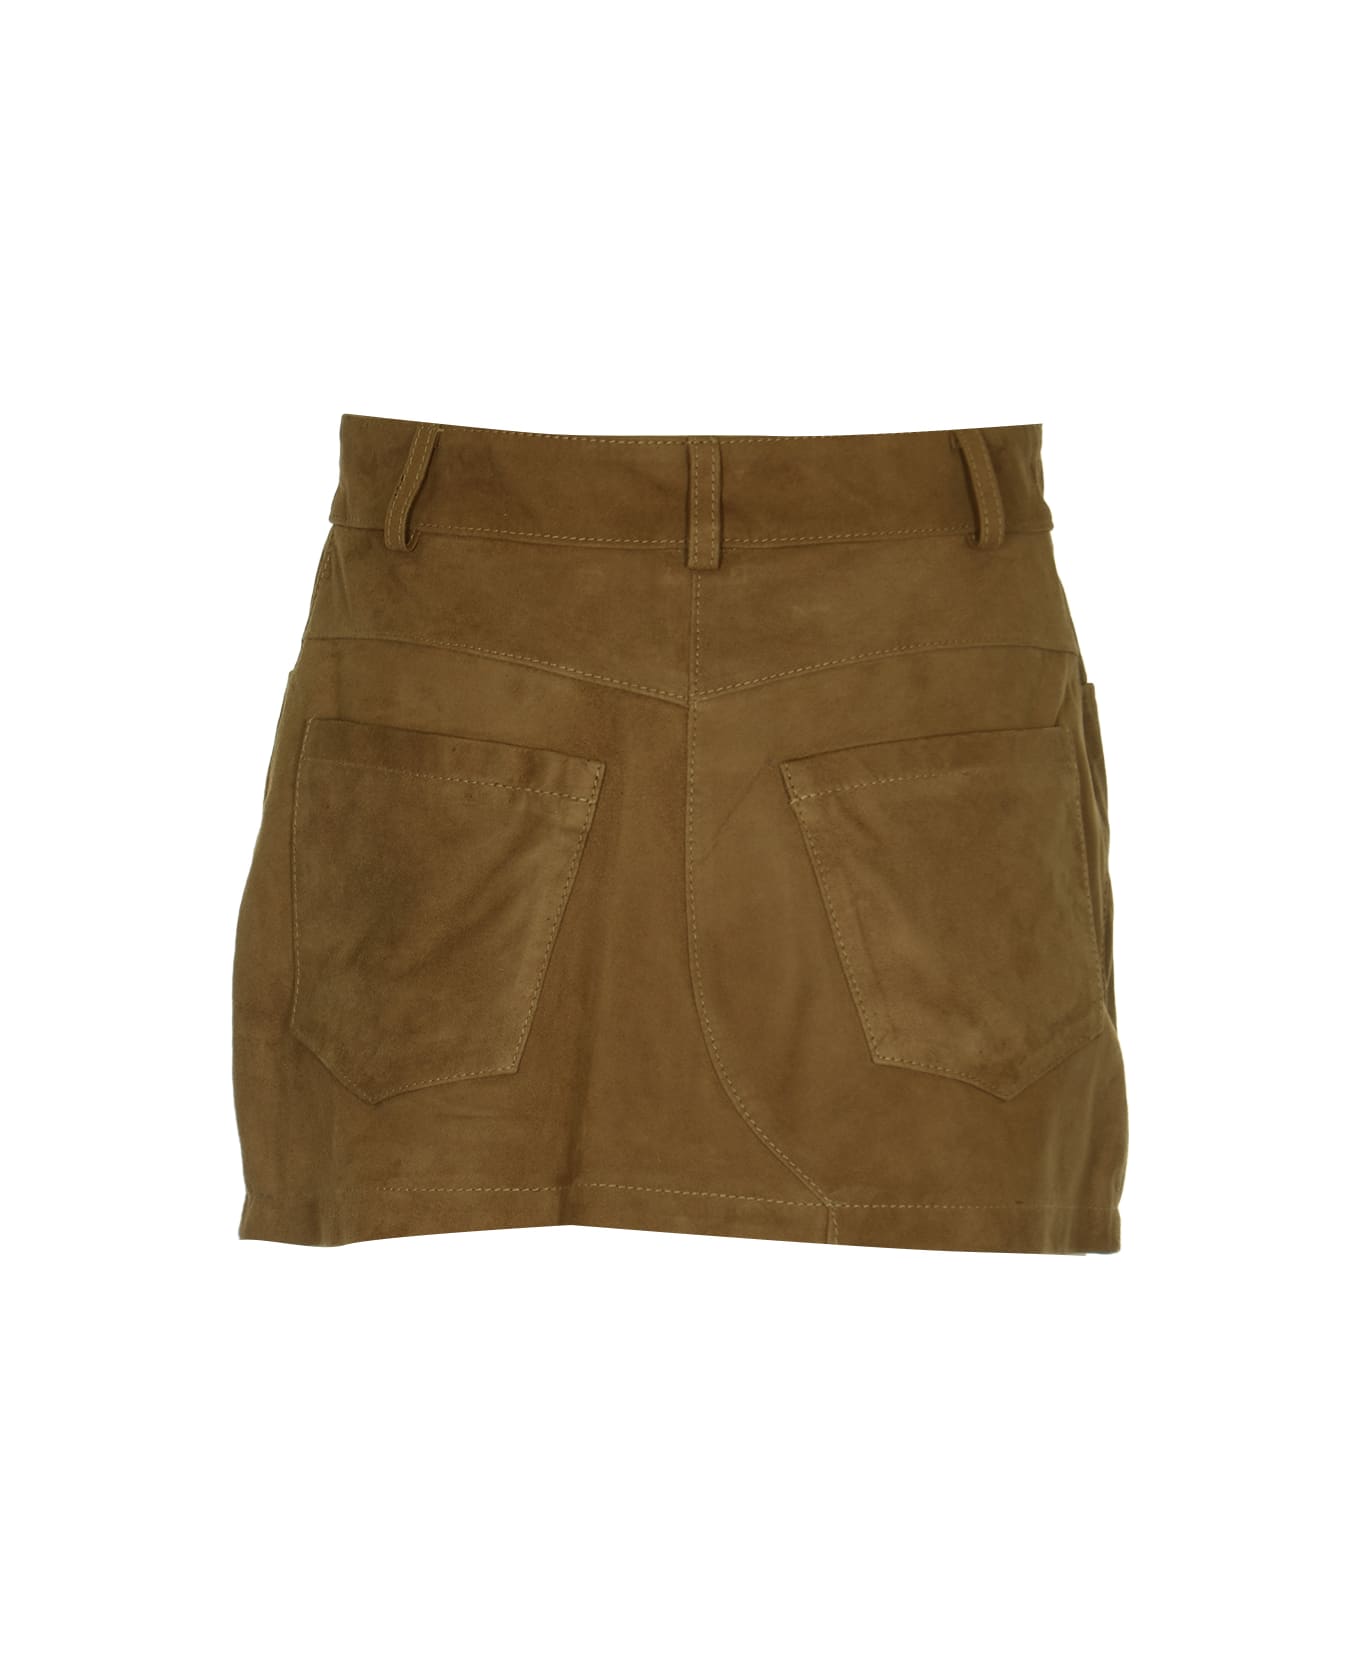 DFour 5 Pockets Short Skirt - Taupe スカート